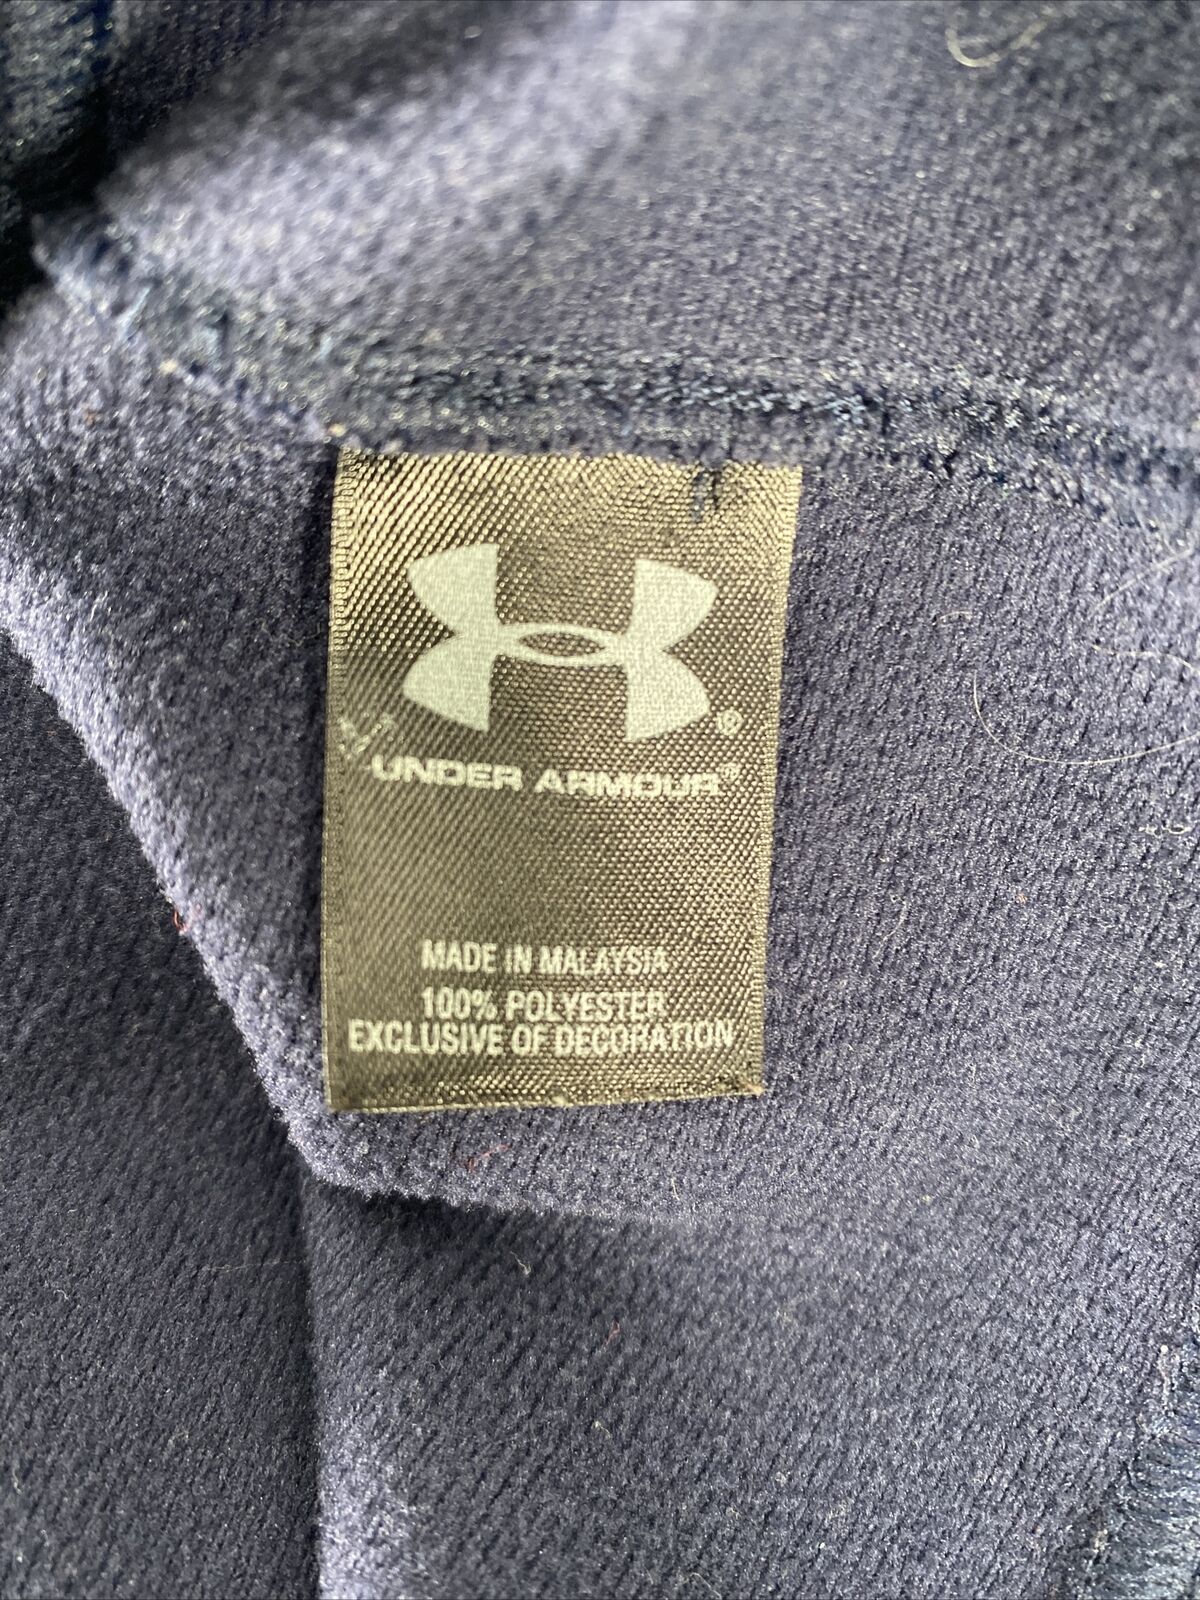 Under Armour Camiseta deportiva con forro polar y cremallera de 1/4 para hombre, color azul, S